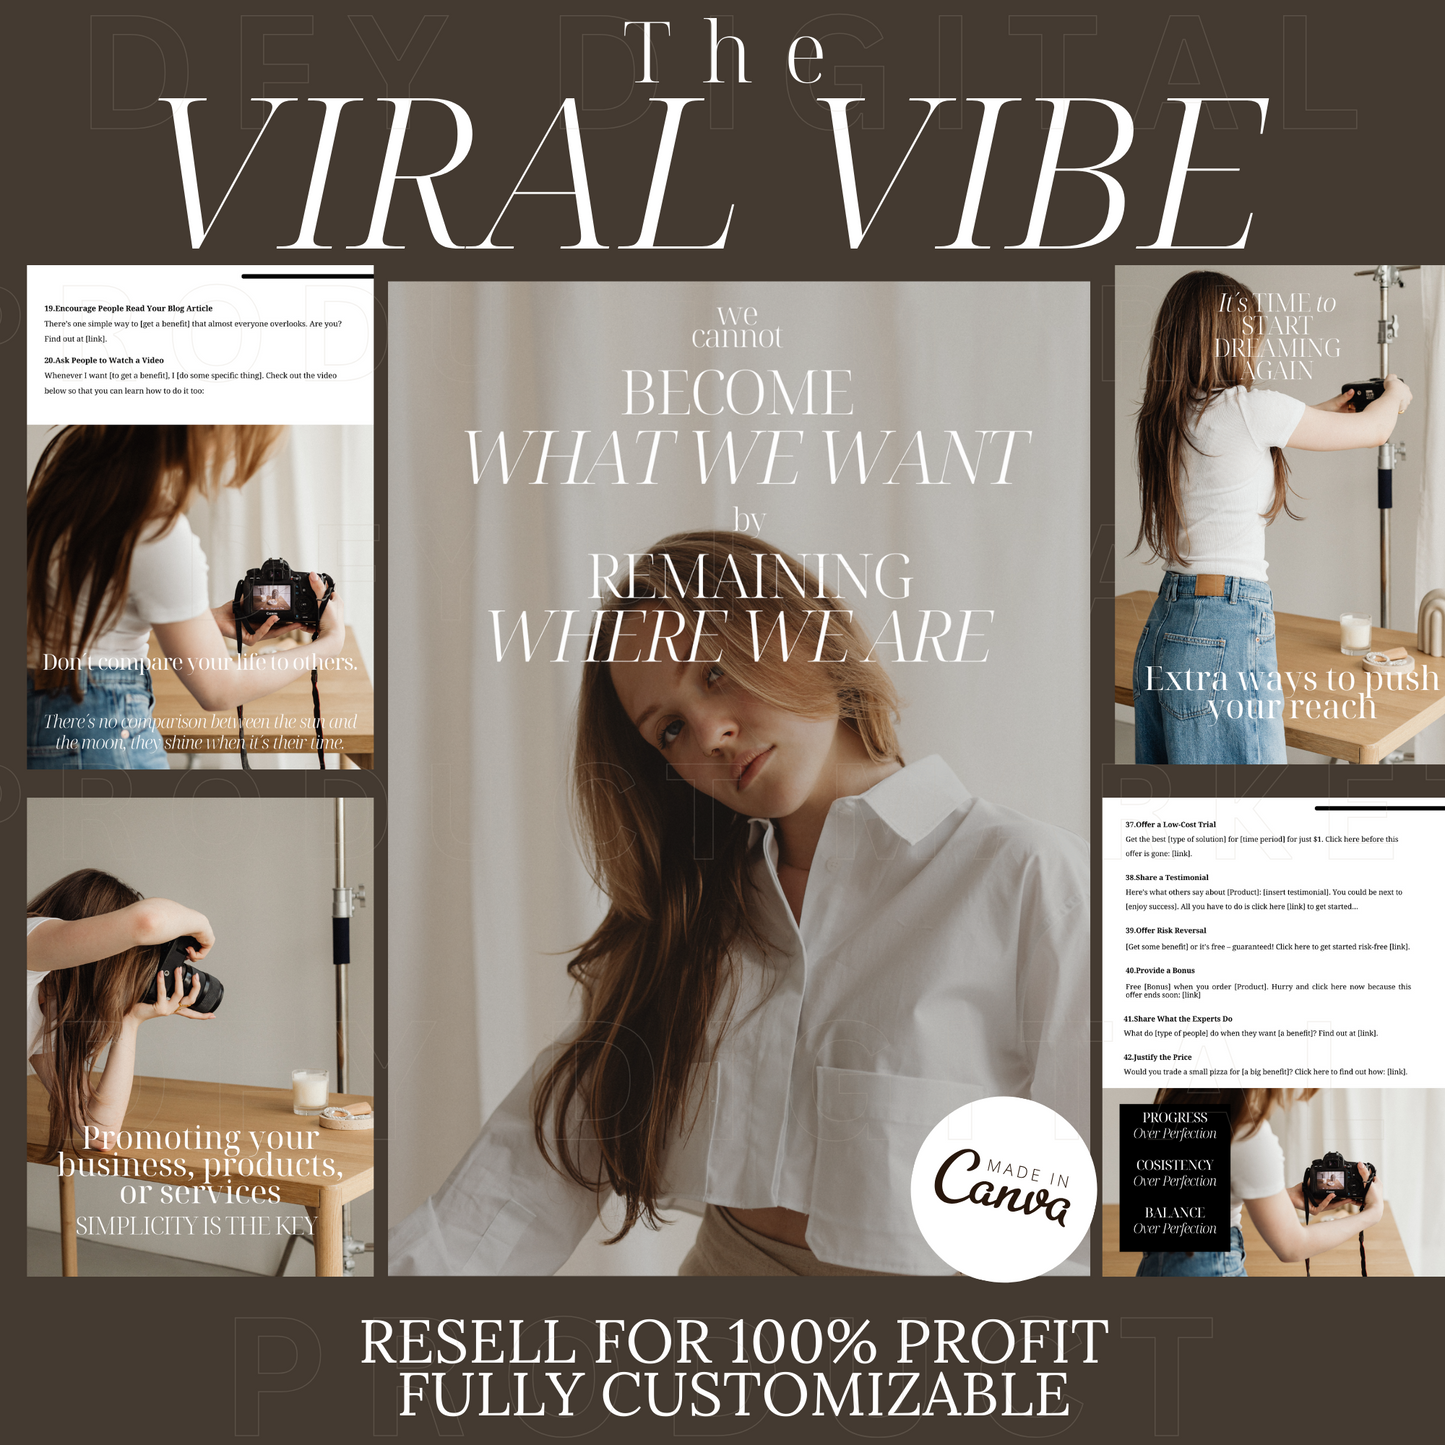 The Viral Vibe - 50 Inspiring Social Media Ideas with MRR / PLR